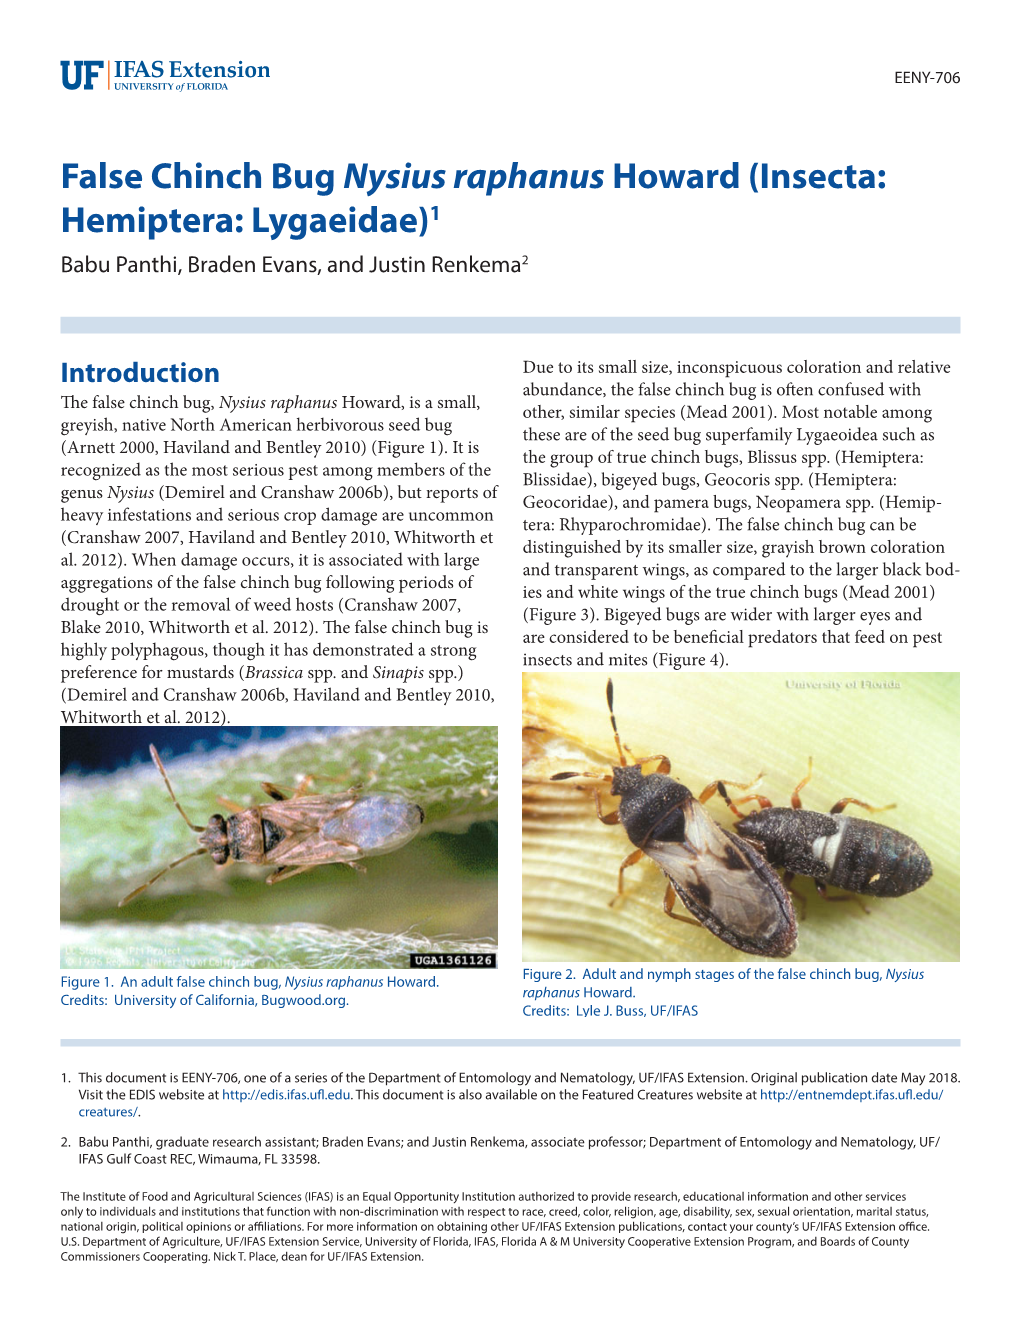 False Chinch Bug Nysius Raphanus Howard (Insecta: Hemiptera: Lygaeidae)1 Babu Panthi, Braden Evans, and Justin Renkema2